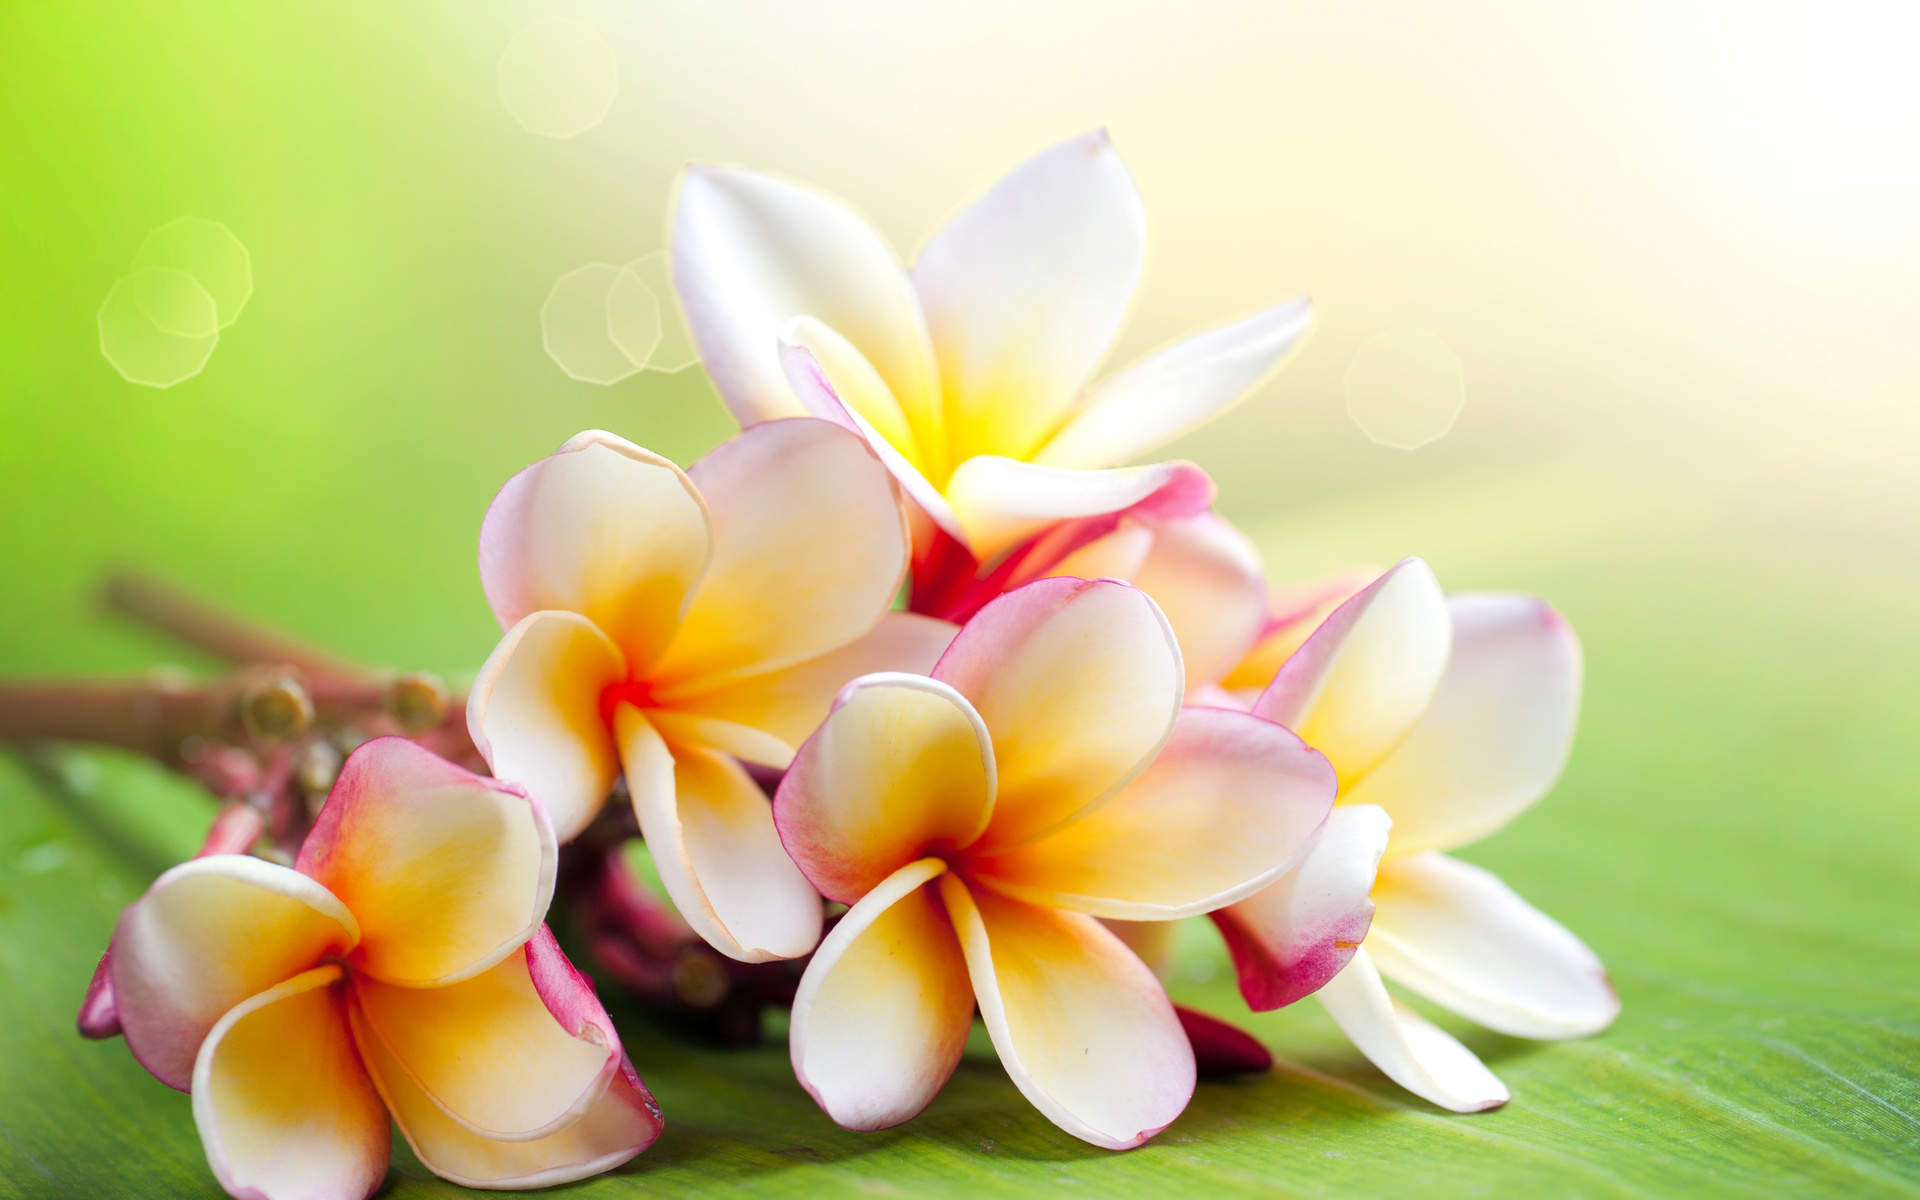 261334 descargar imagen tierra/naturaleza, frangipani, flor, flores: fondos de pantalla y protectores de pantalla gratis